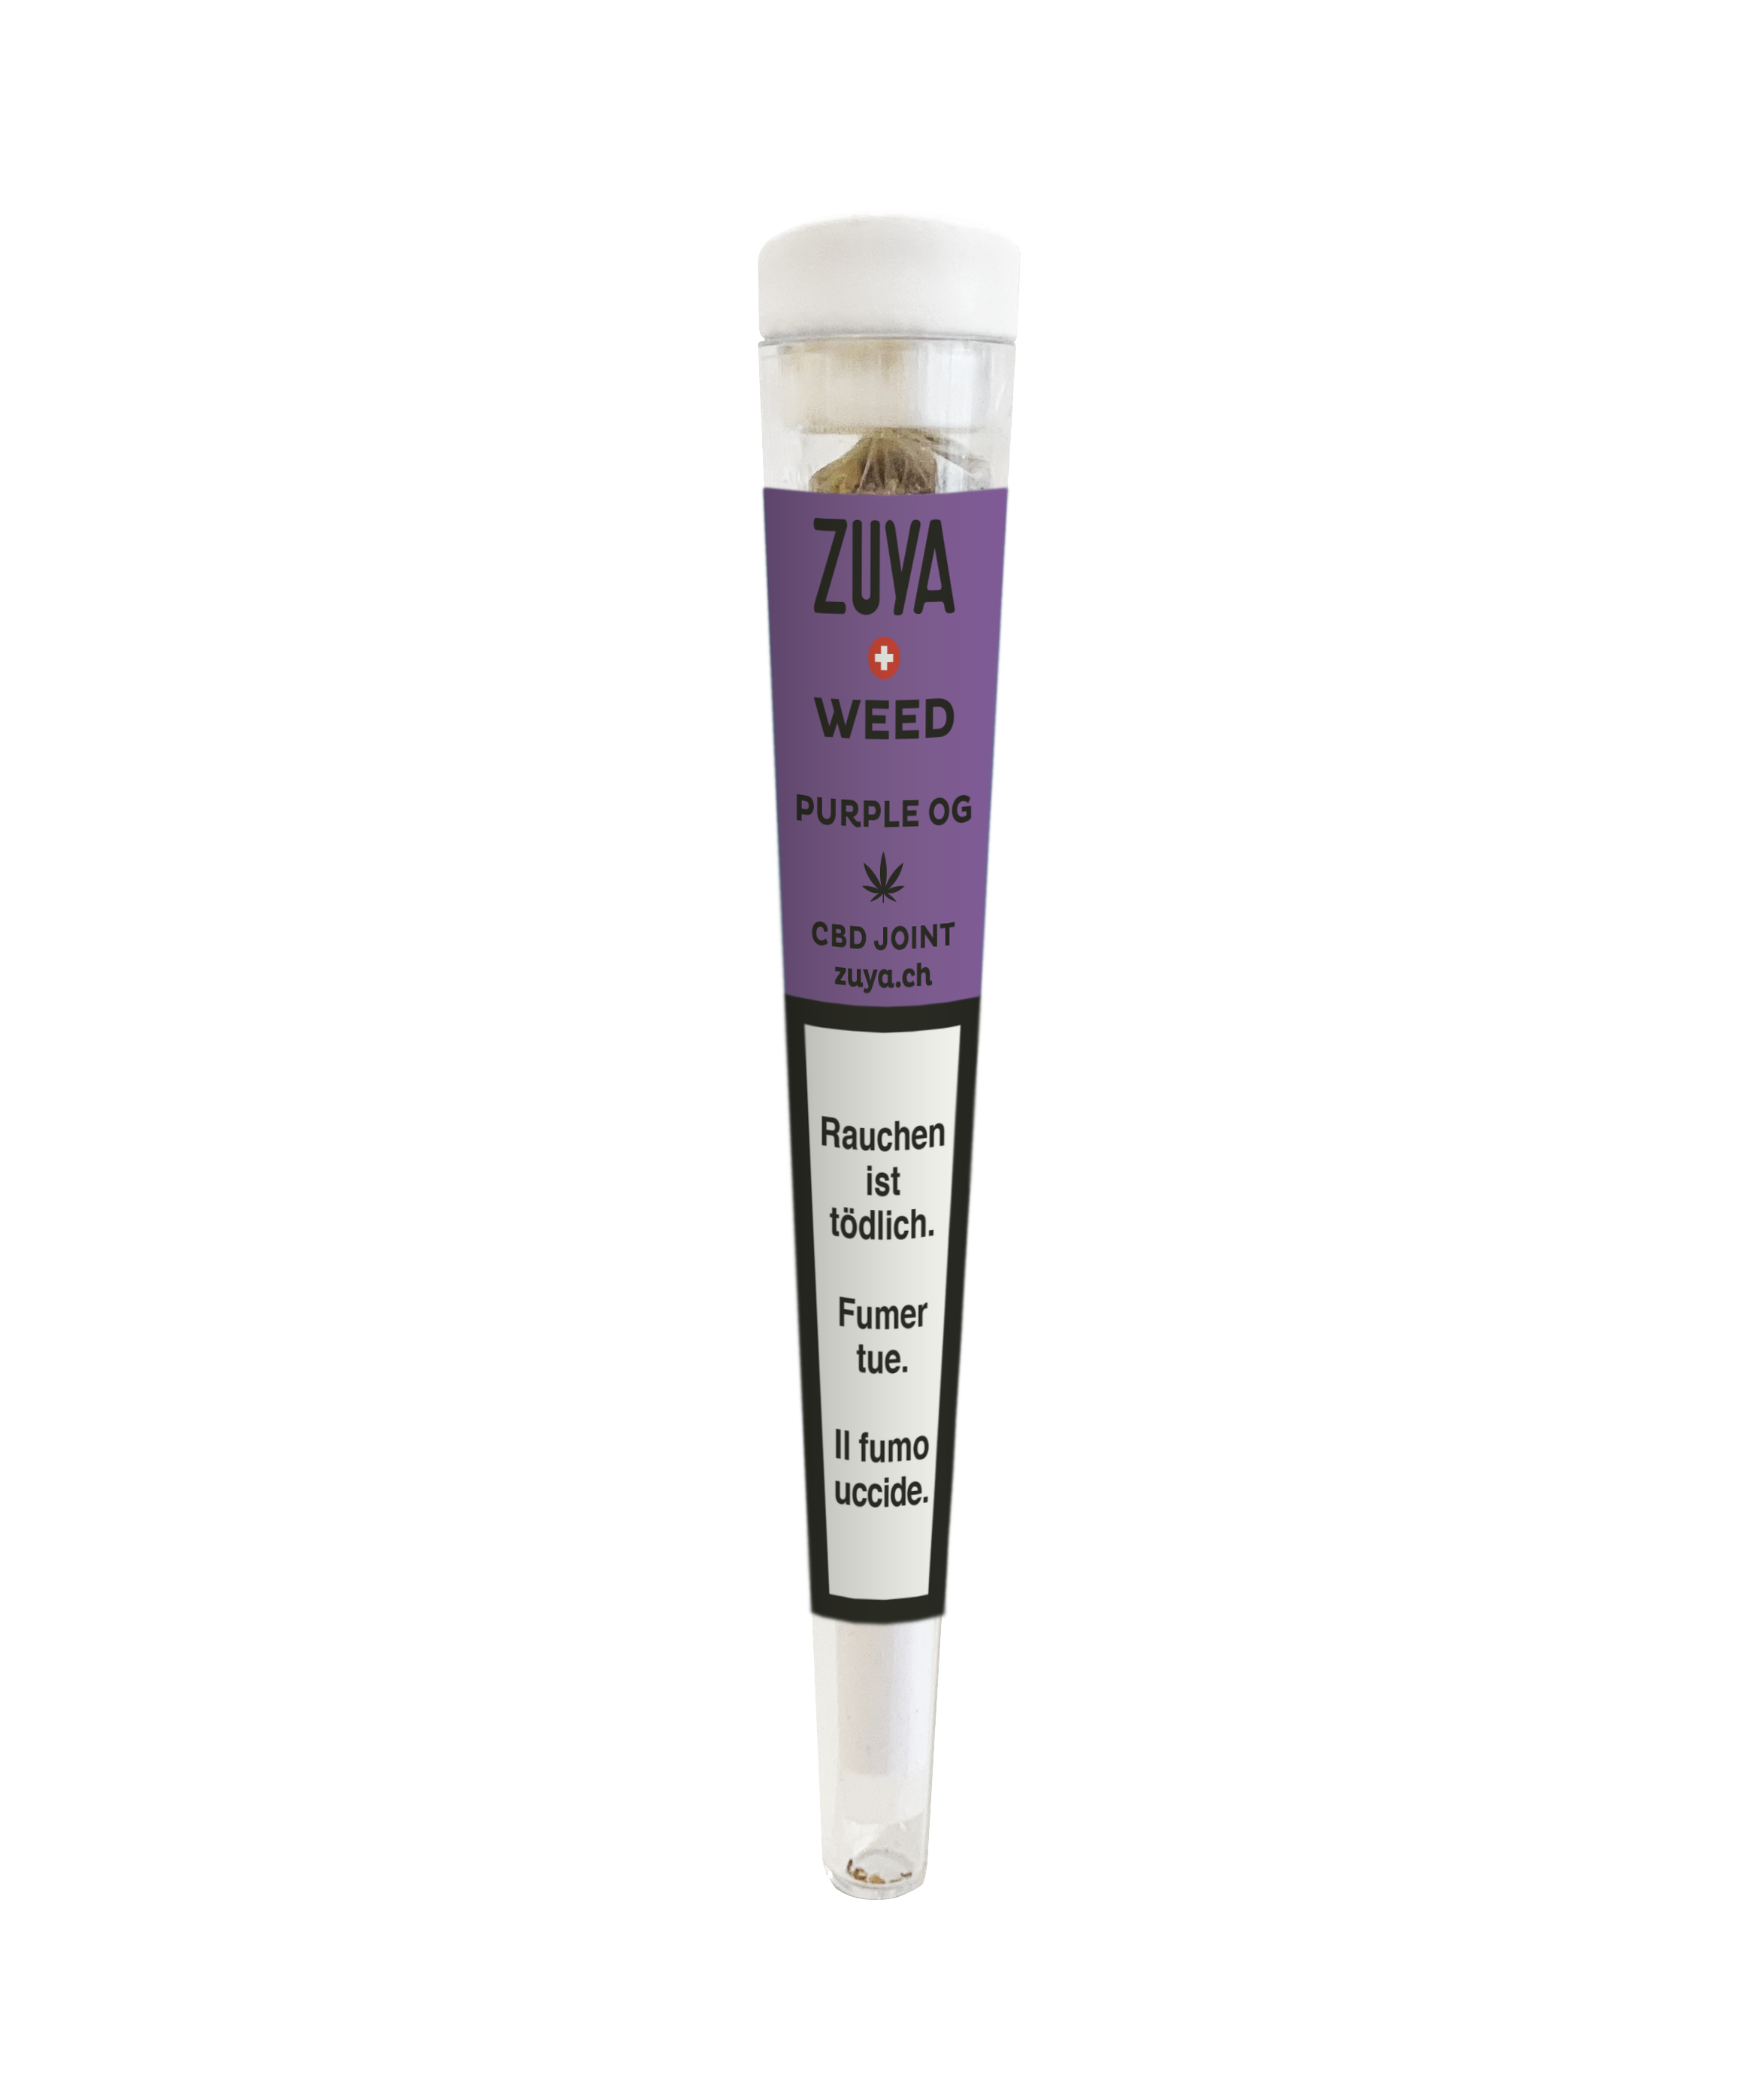 ZUYA Weed Purple OG - CBD Joint